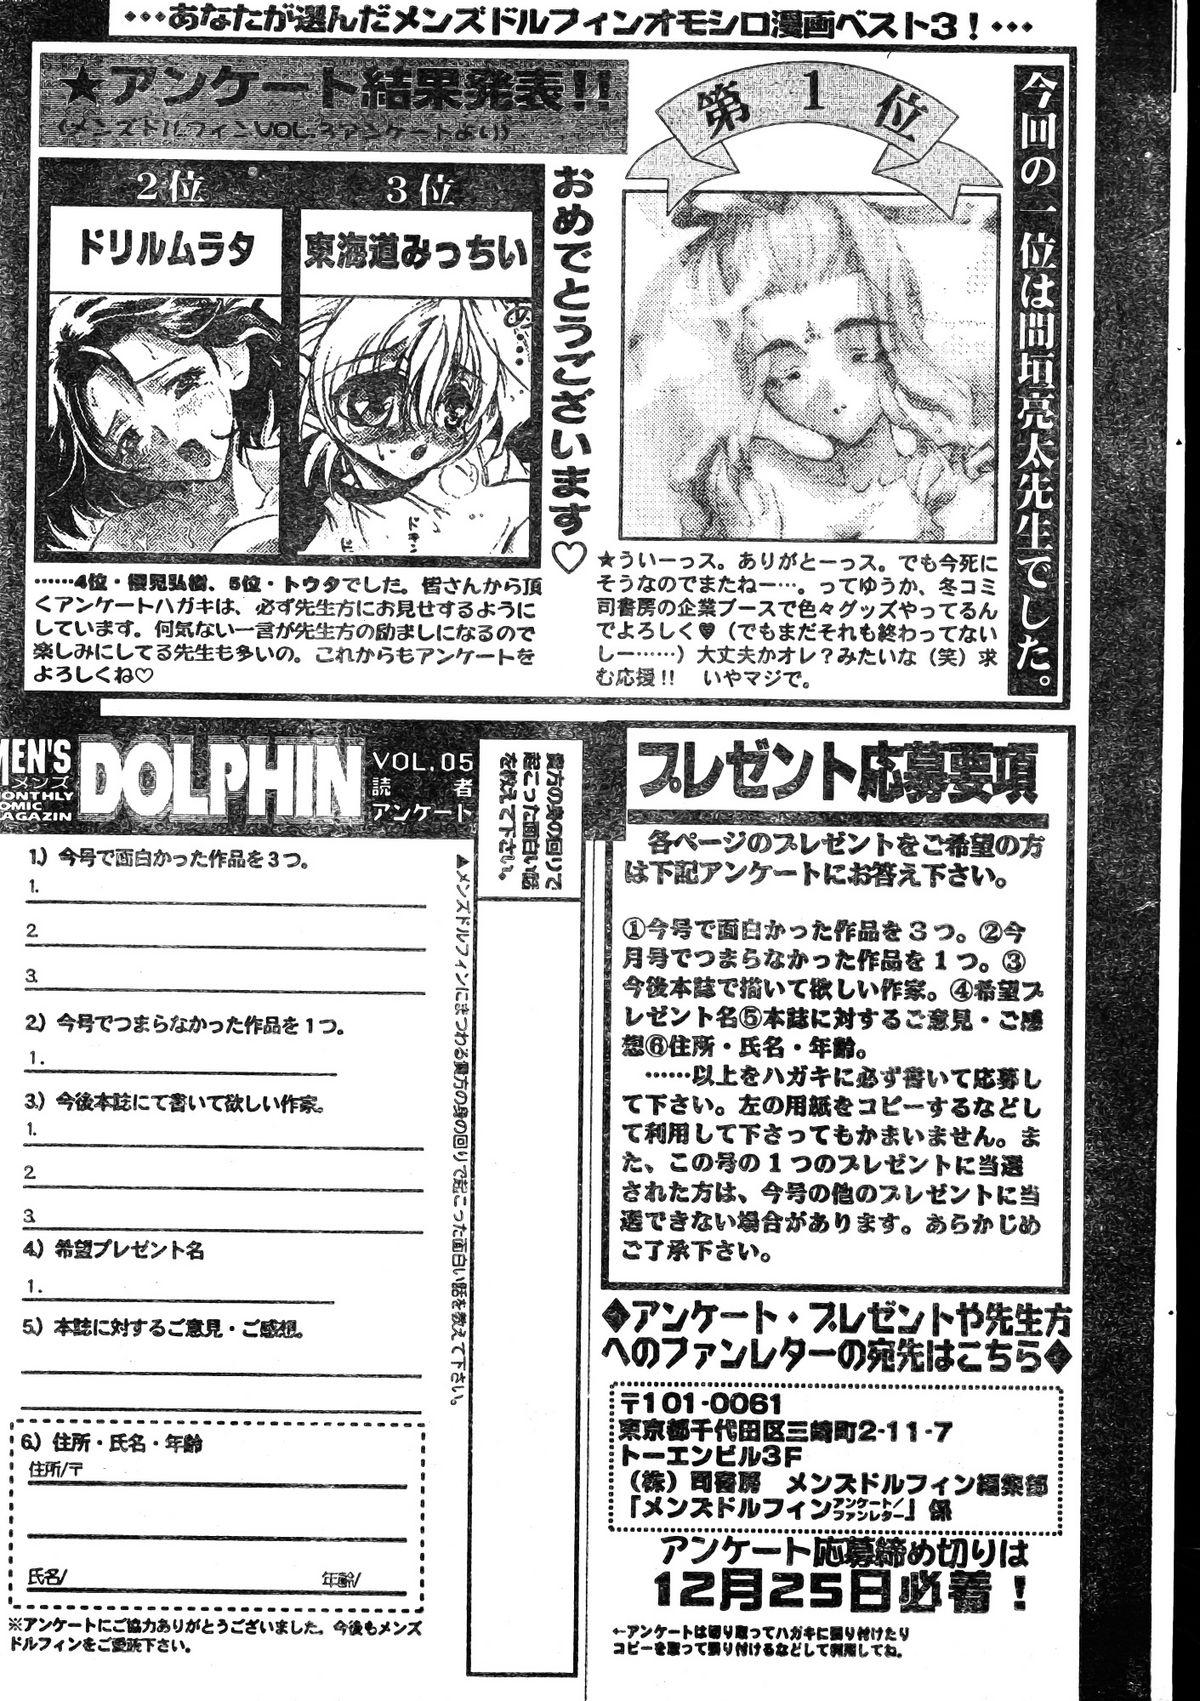 Men's Dolphin 2000-01 Vol. 05 262